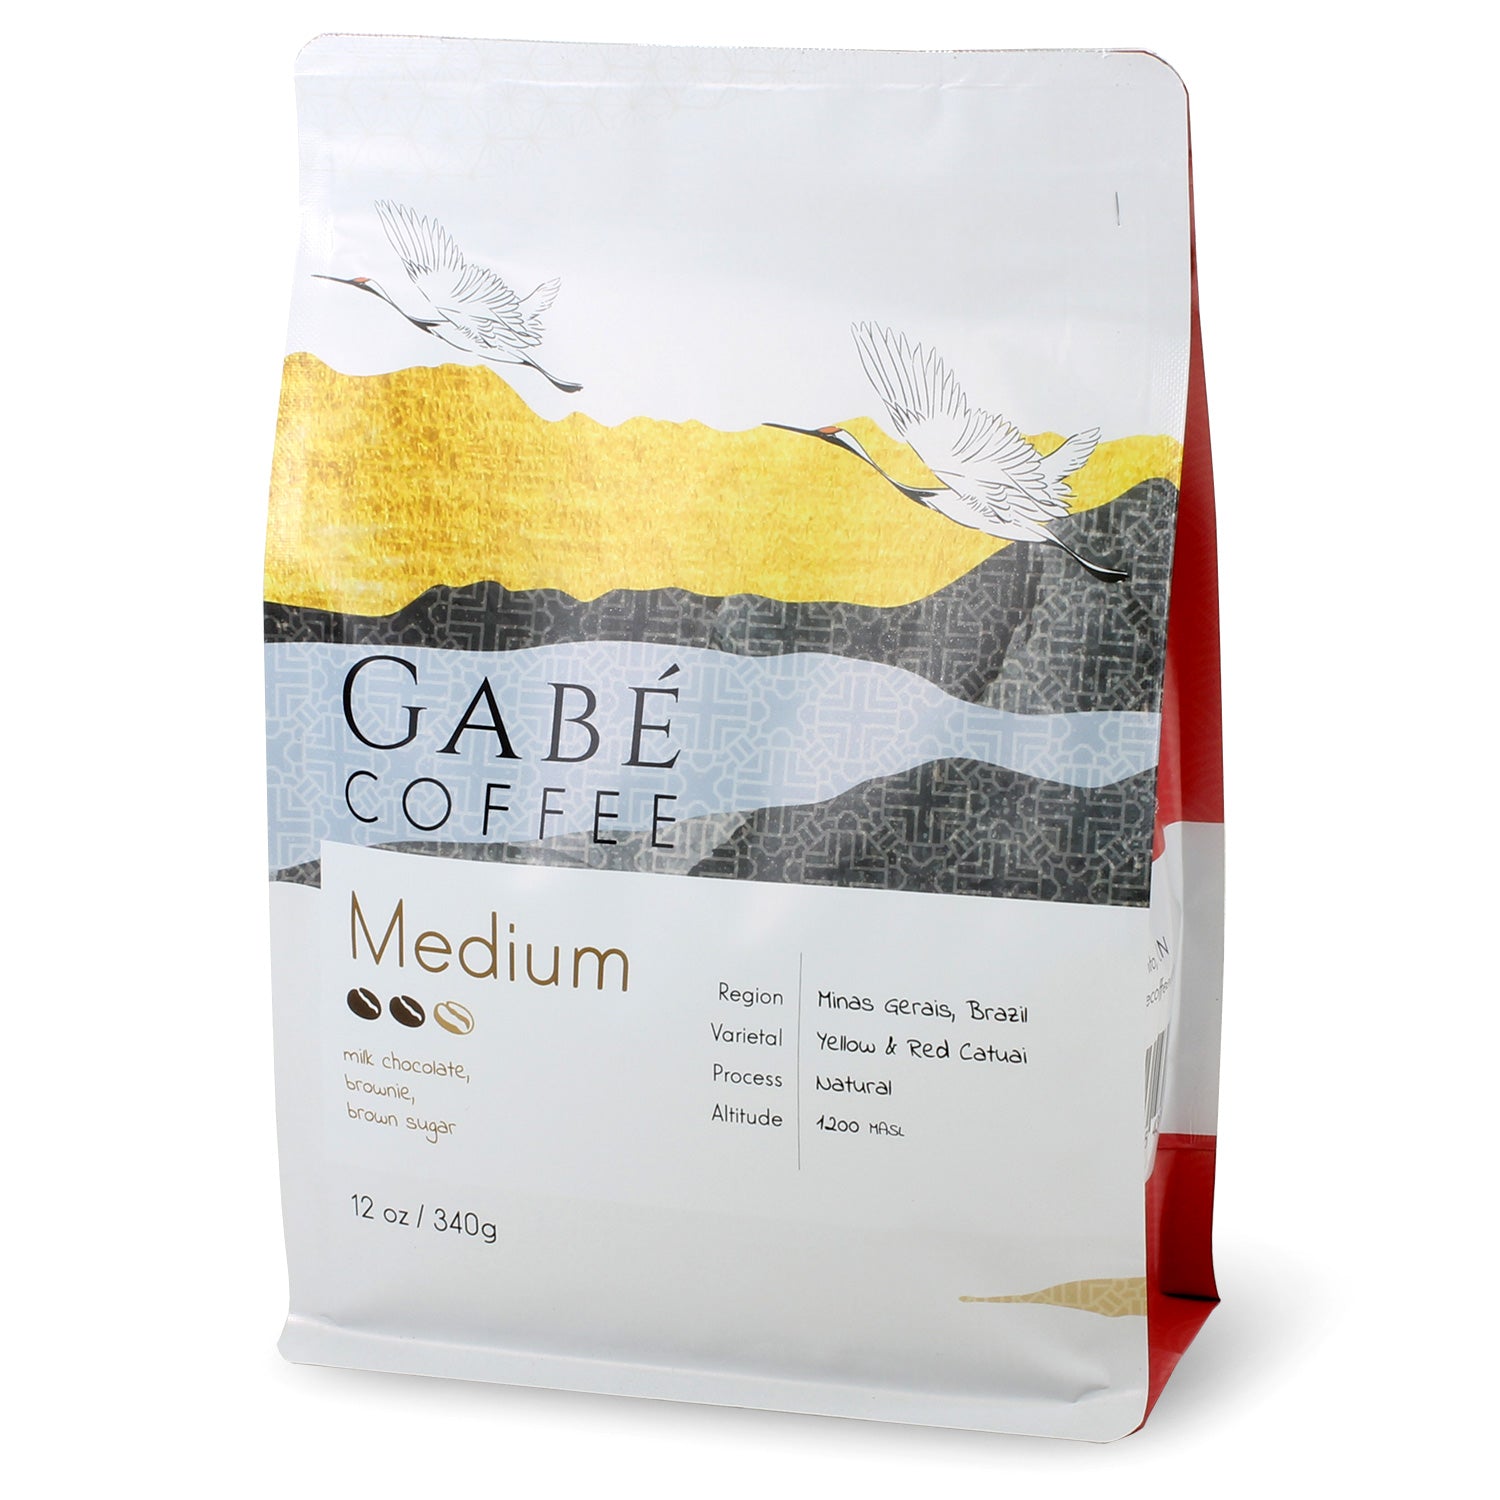 Gabé Coffee - Medium Roast Whole Bean Coffee